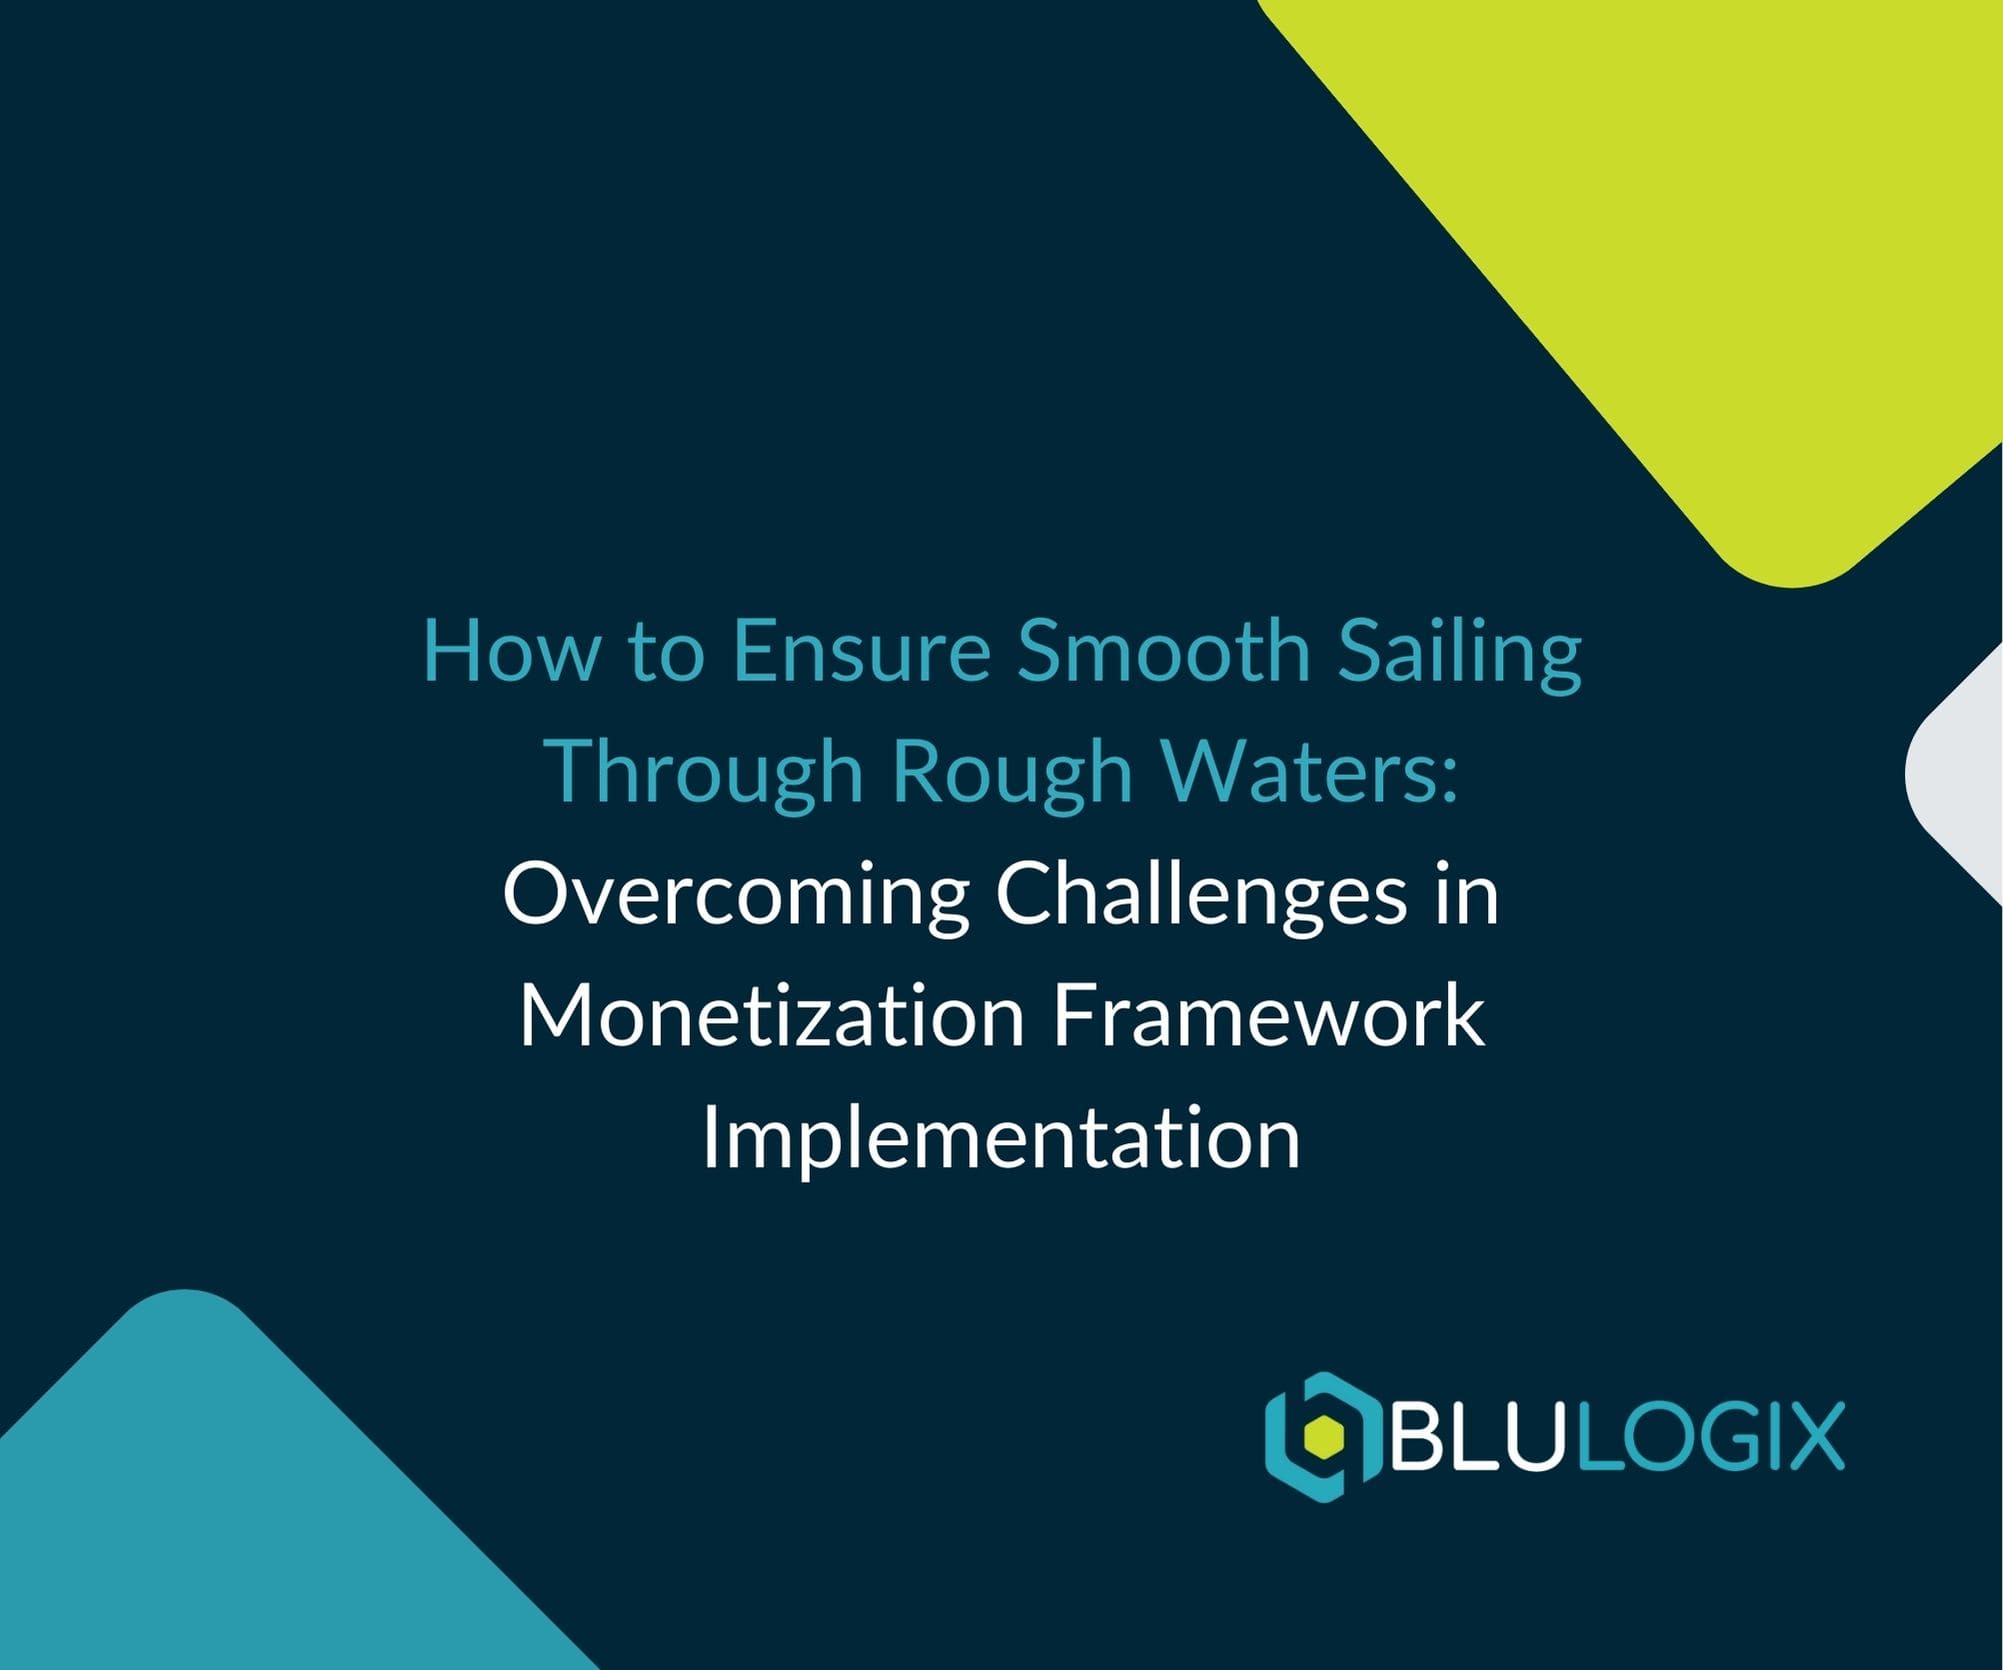 Overcoming Challenges in Monetization Framework Implementation